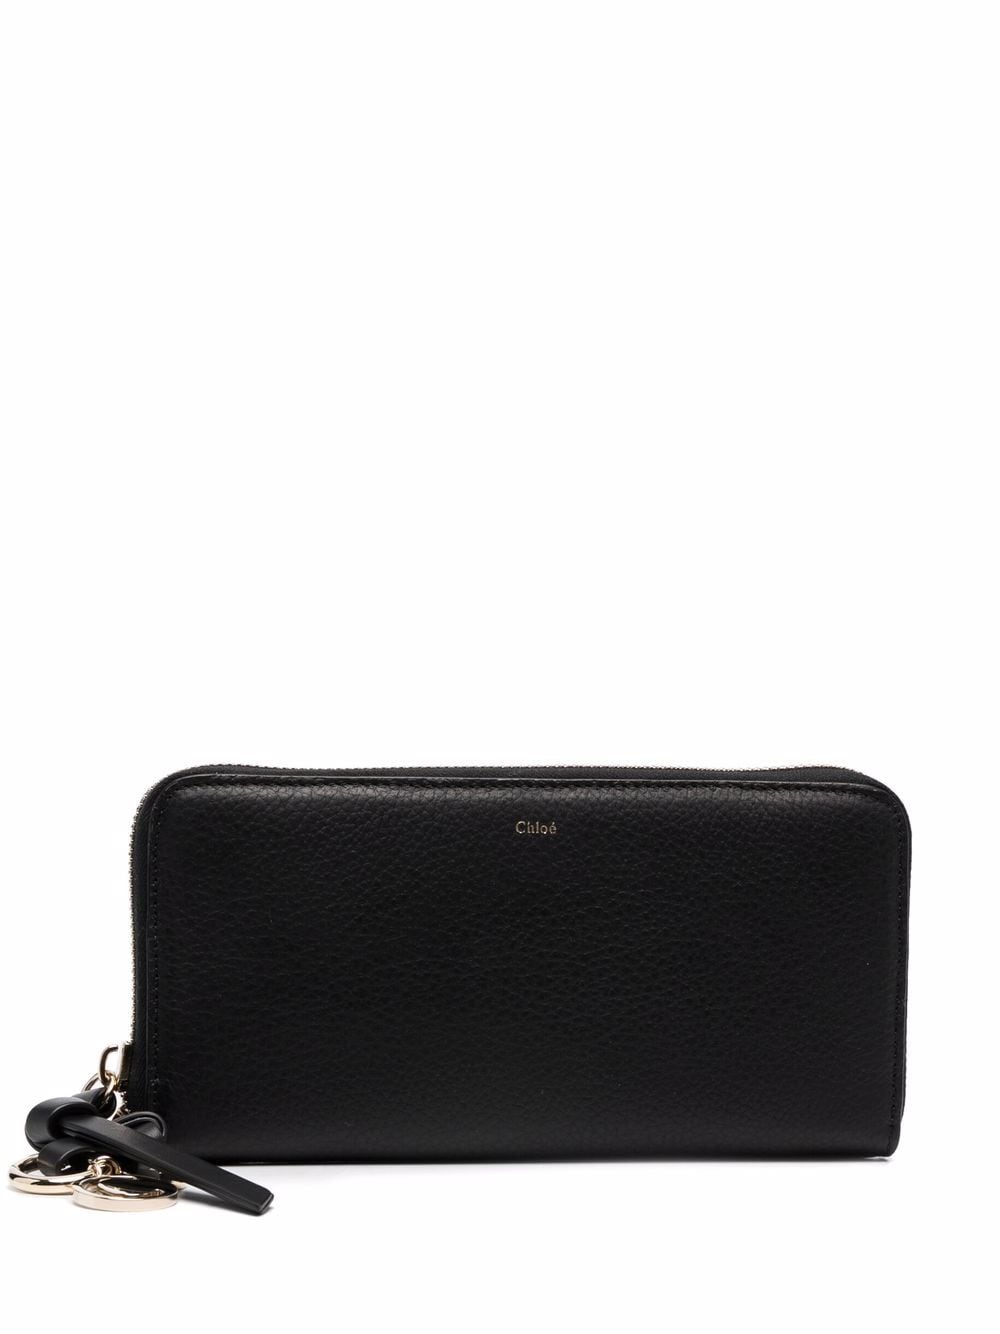 Chloé Alphabet zip-around leather wallet